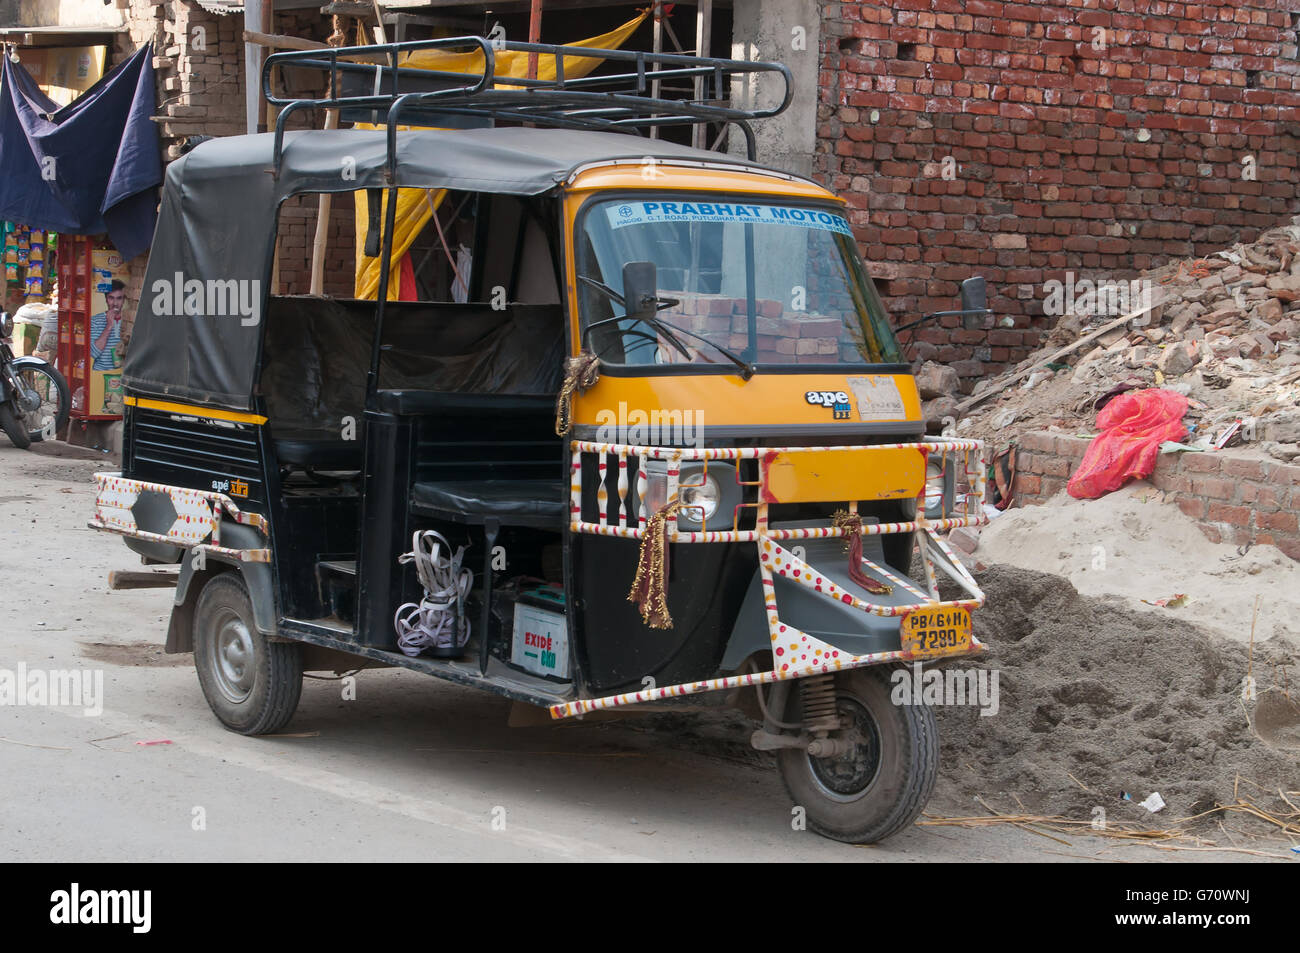 Auto rickshaw or tuk-tuk on the street. Auto rickshaws are a common means of public transportat Stock Photo